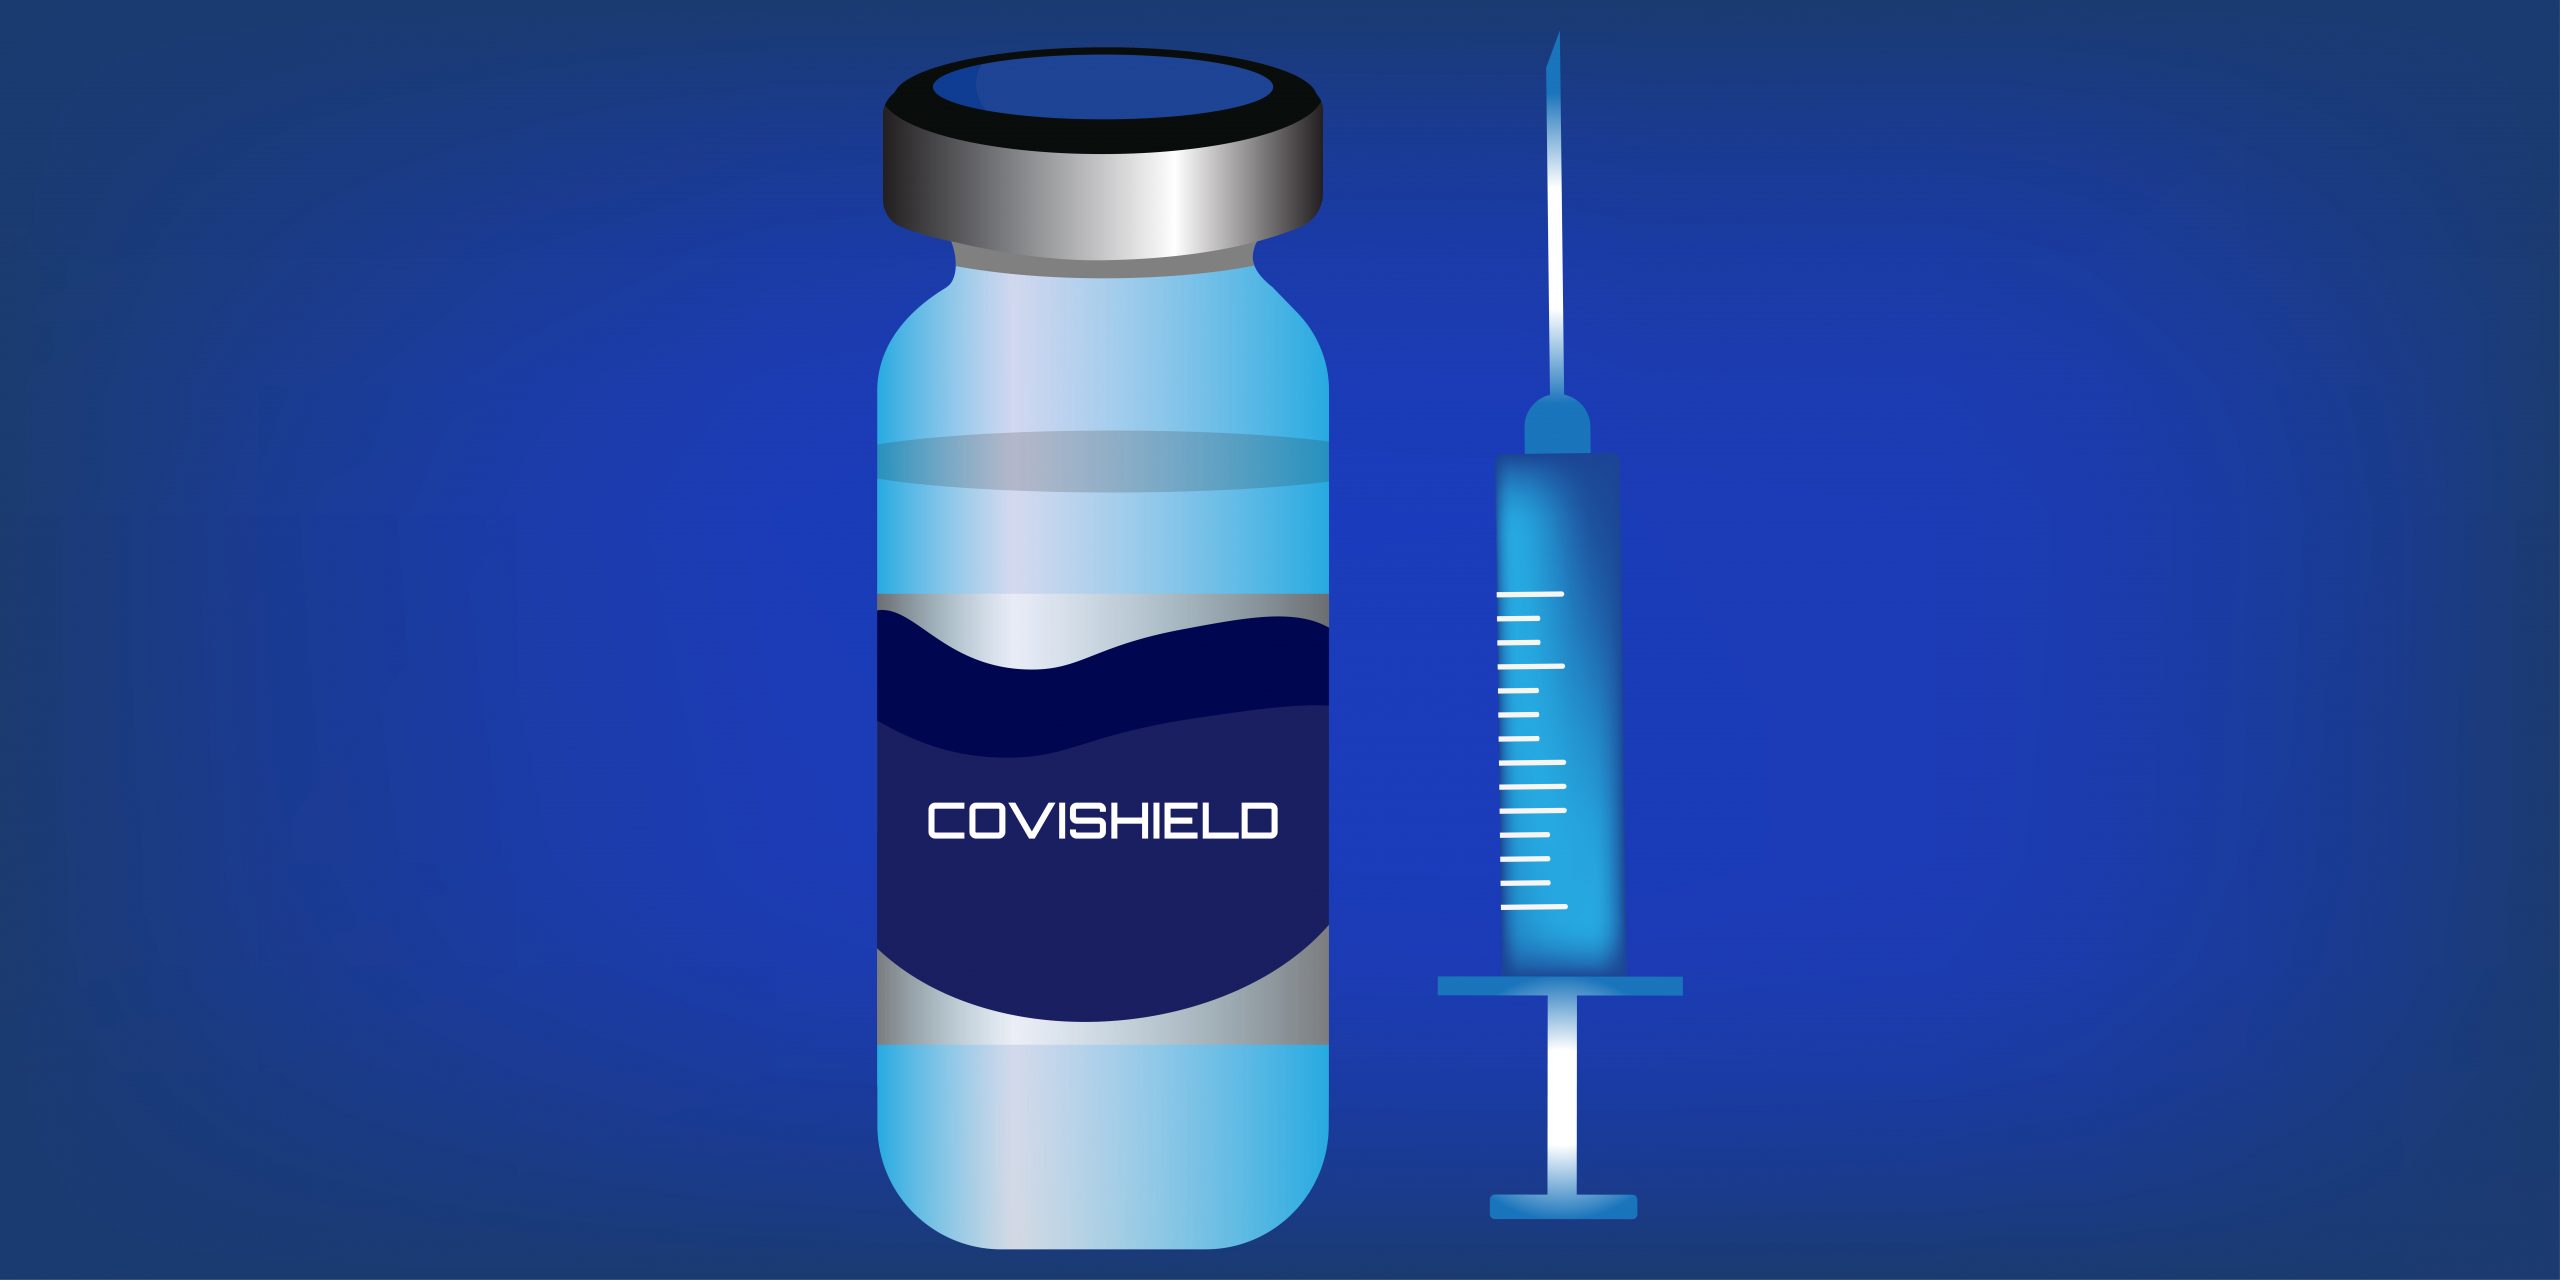 Covishield-vaccine-illustration-illustration